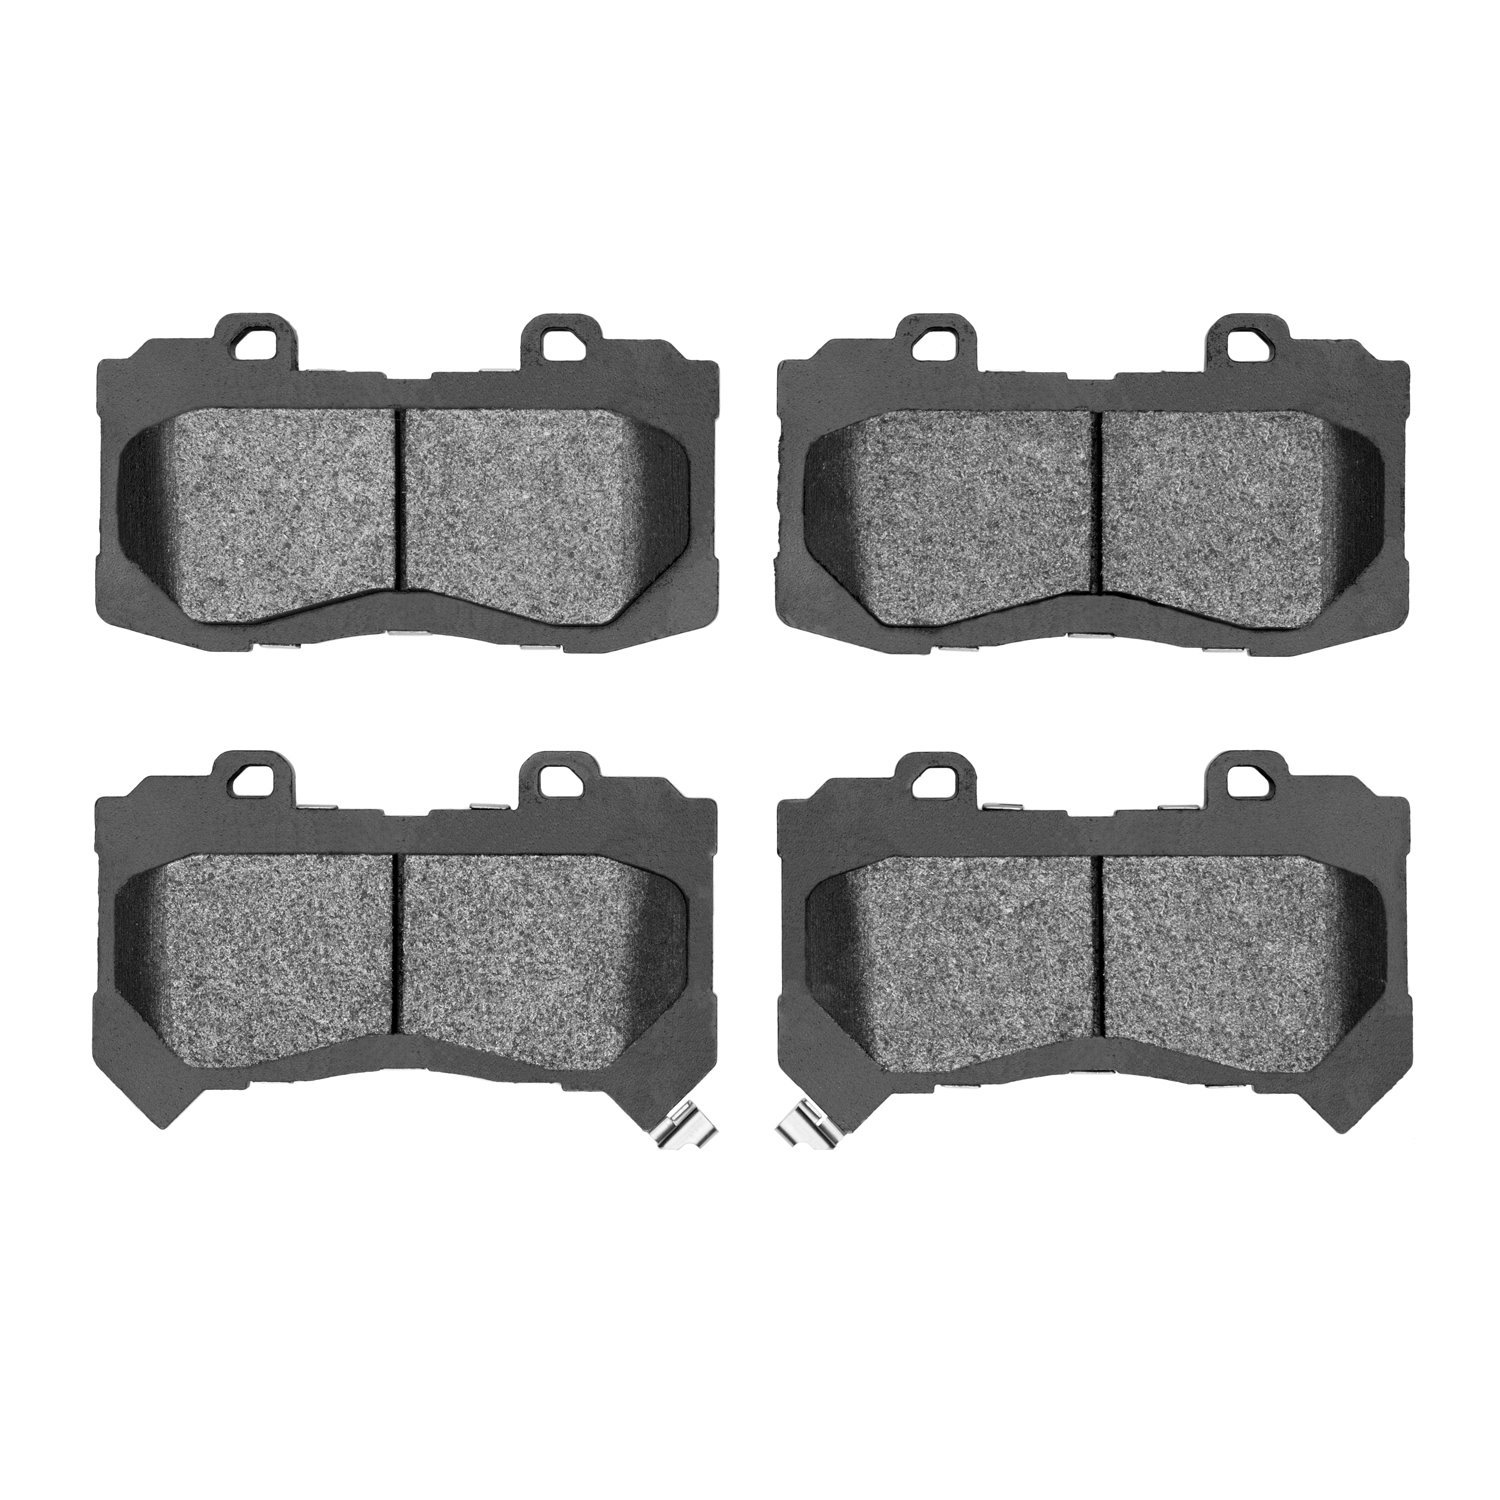 1310-1802-00 3000-Series Ceramic Brake Pads, 2015-2020 GM, Position: Front